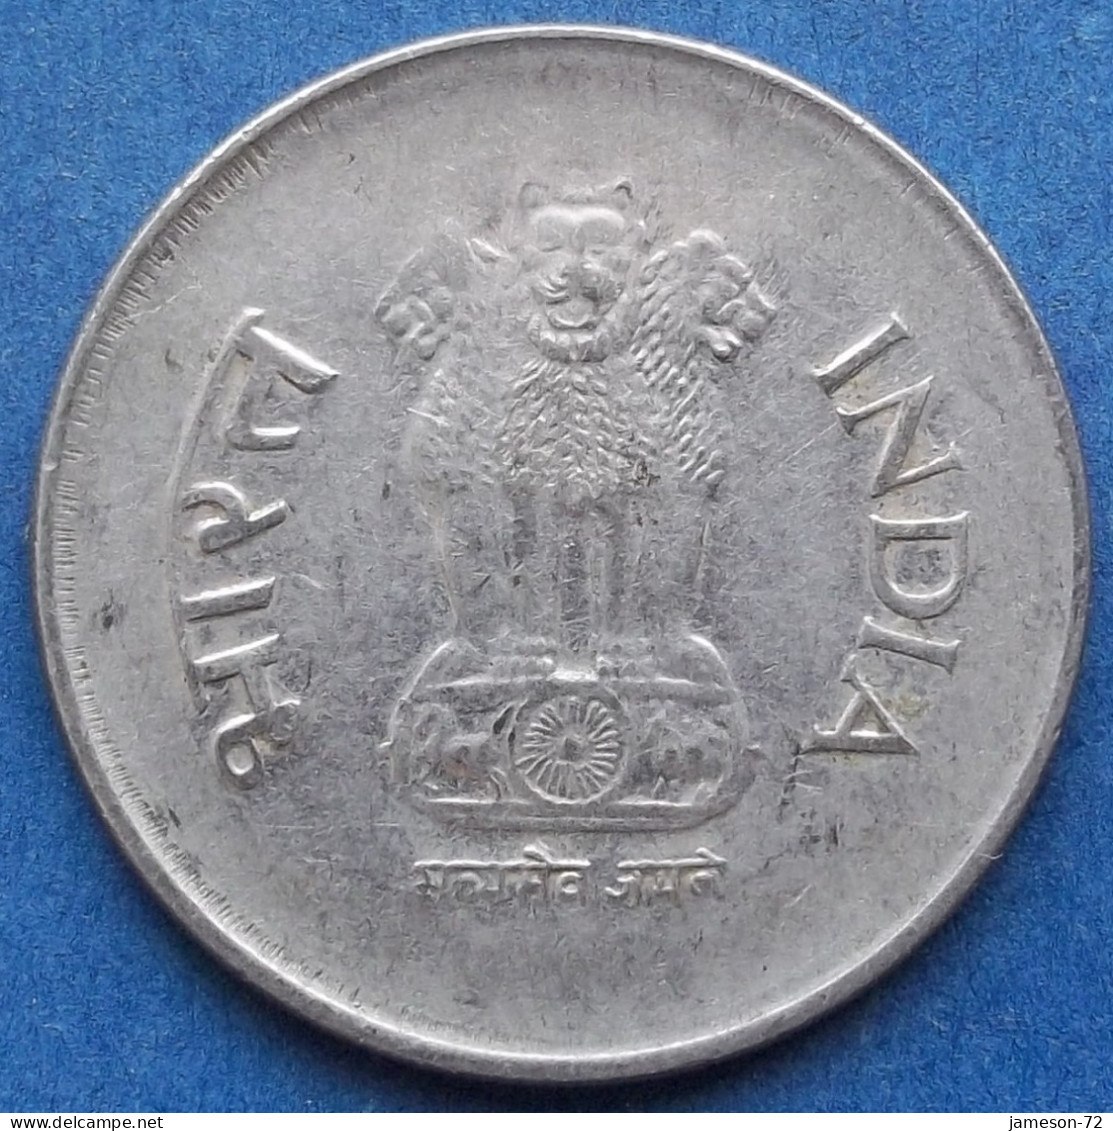 INDIA - 1 Rupee 2000 "Grain Ears Flank" KM# 92.2 Republic Decimal Coinage (1957) - Edelweiss Coins - Georgia